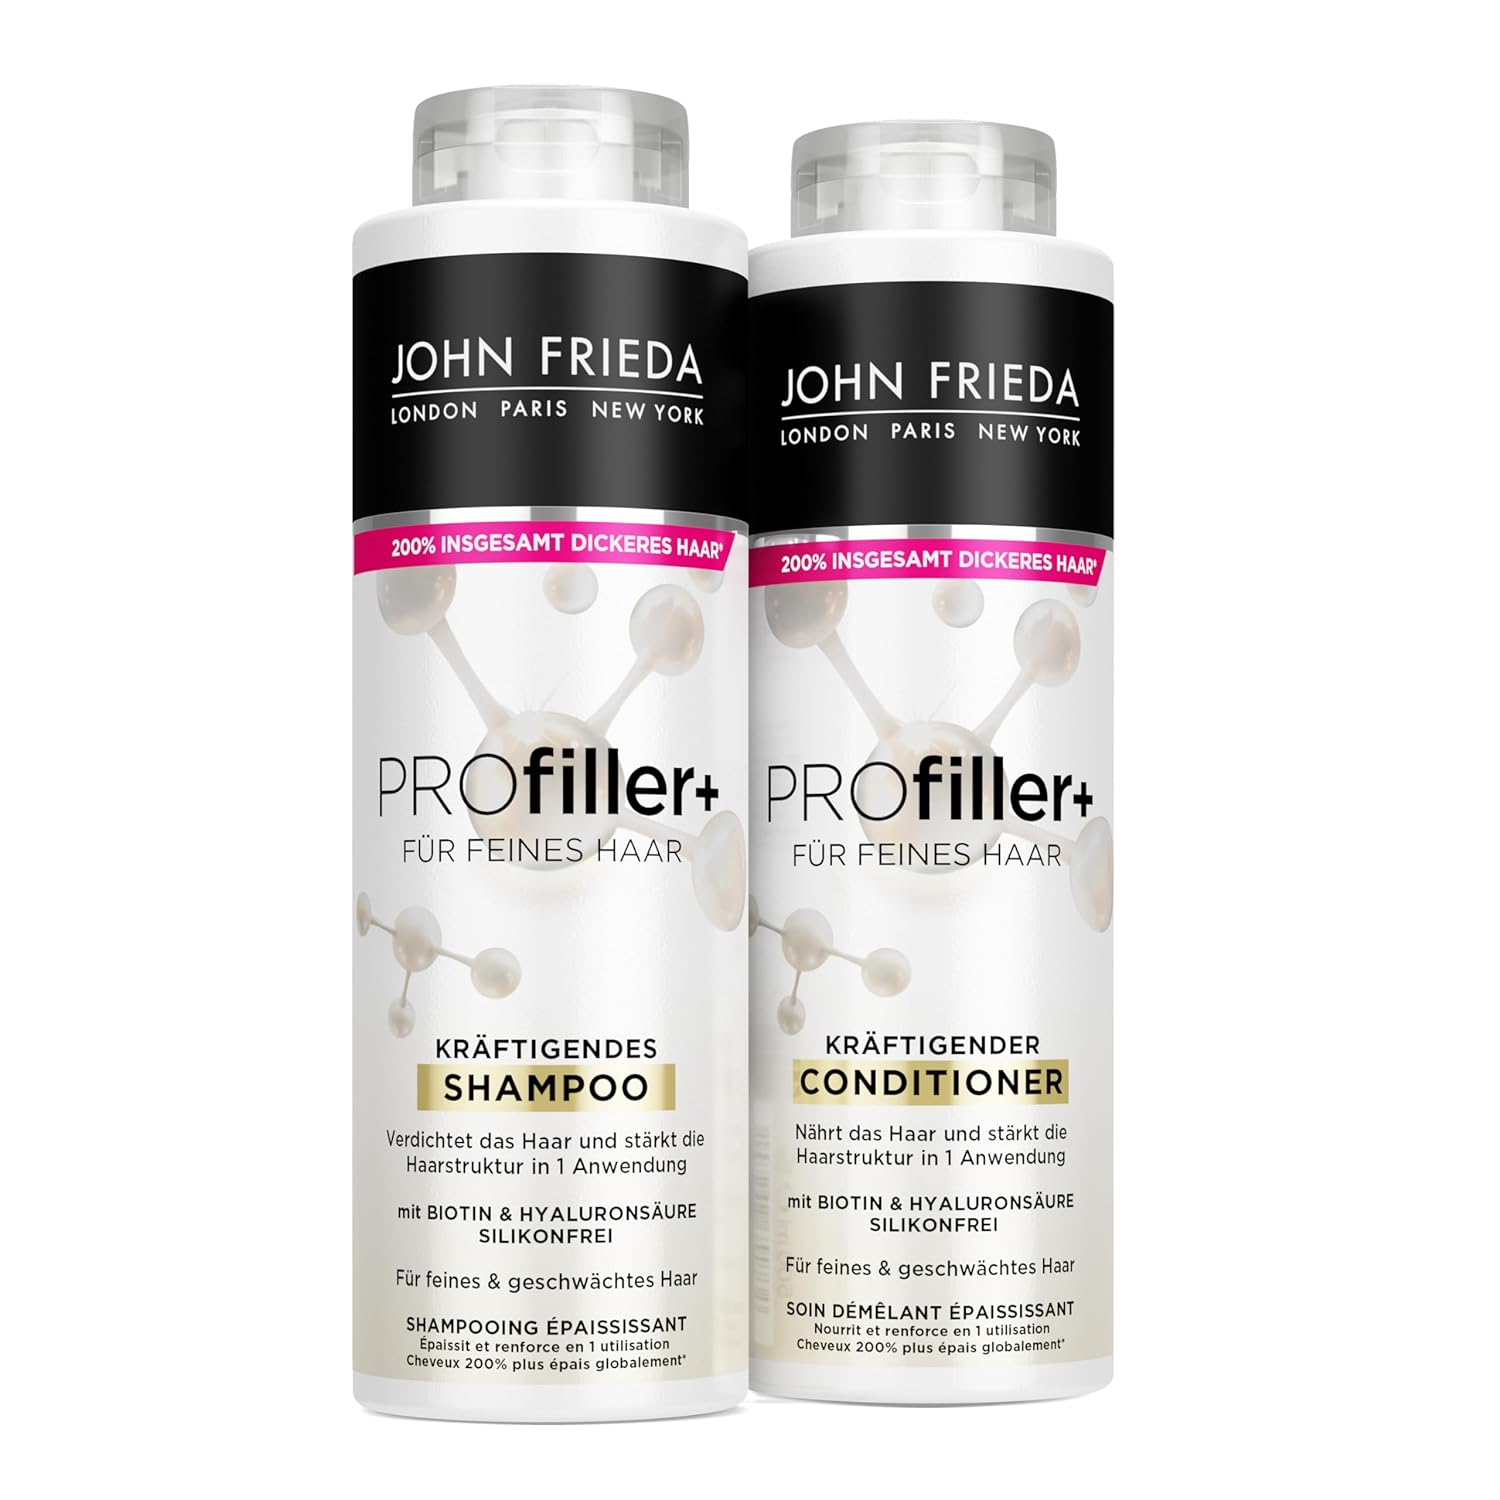 John Frieda Profiller+ Shampoo/Conditioner Value Set - Contents: 1 x shampoo 500 ml & 1 x Conditioner 500 ml - for fine hair